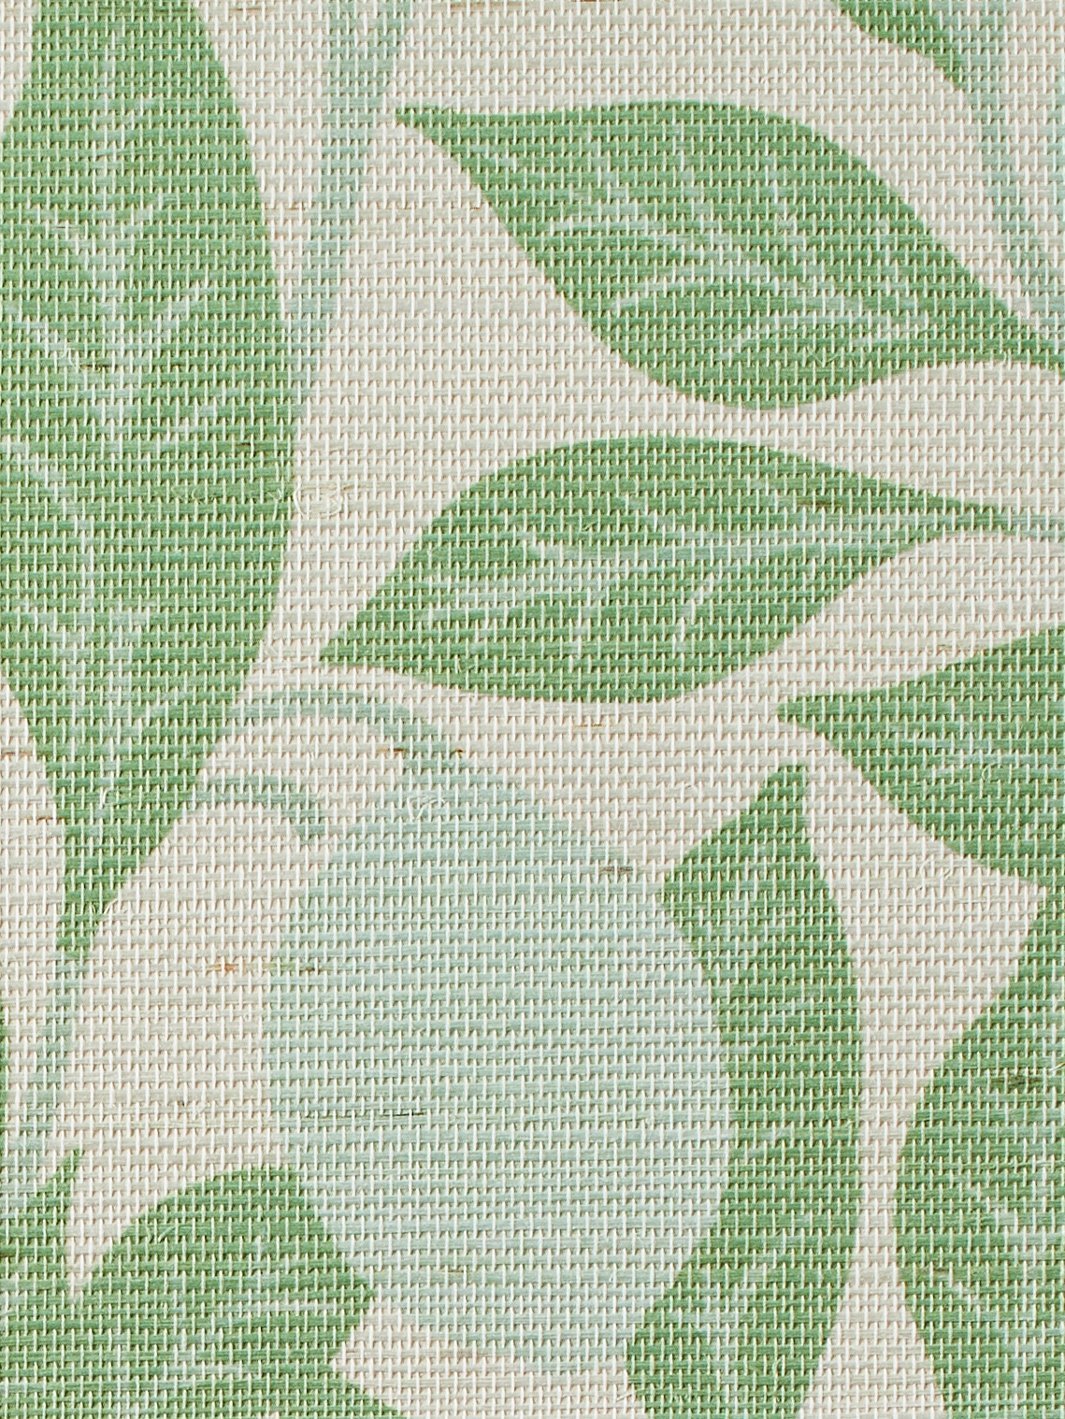 'Lemons' Grasscloth' Wallpaper by Nathan Turner - Green